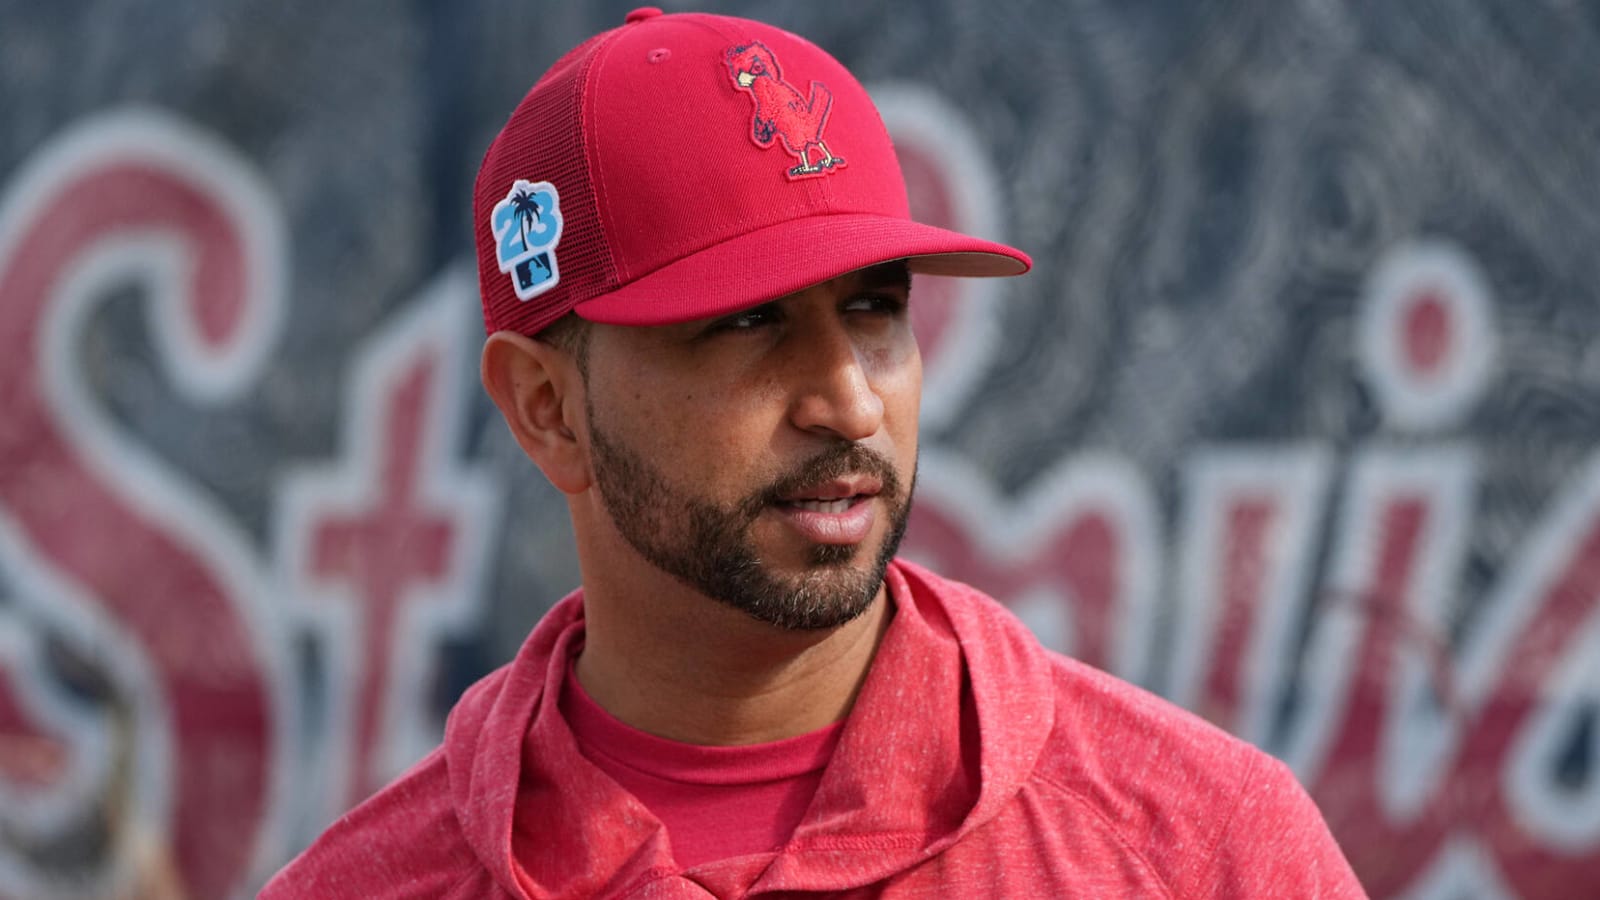 MLB investigating exchange between Cardinals manager, ump